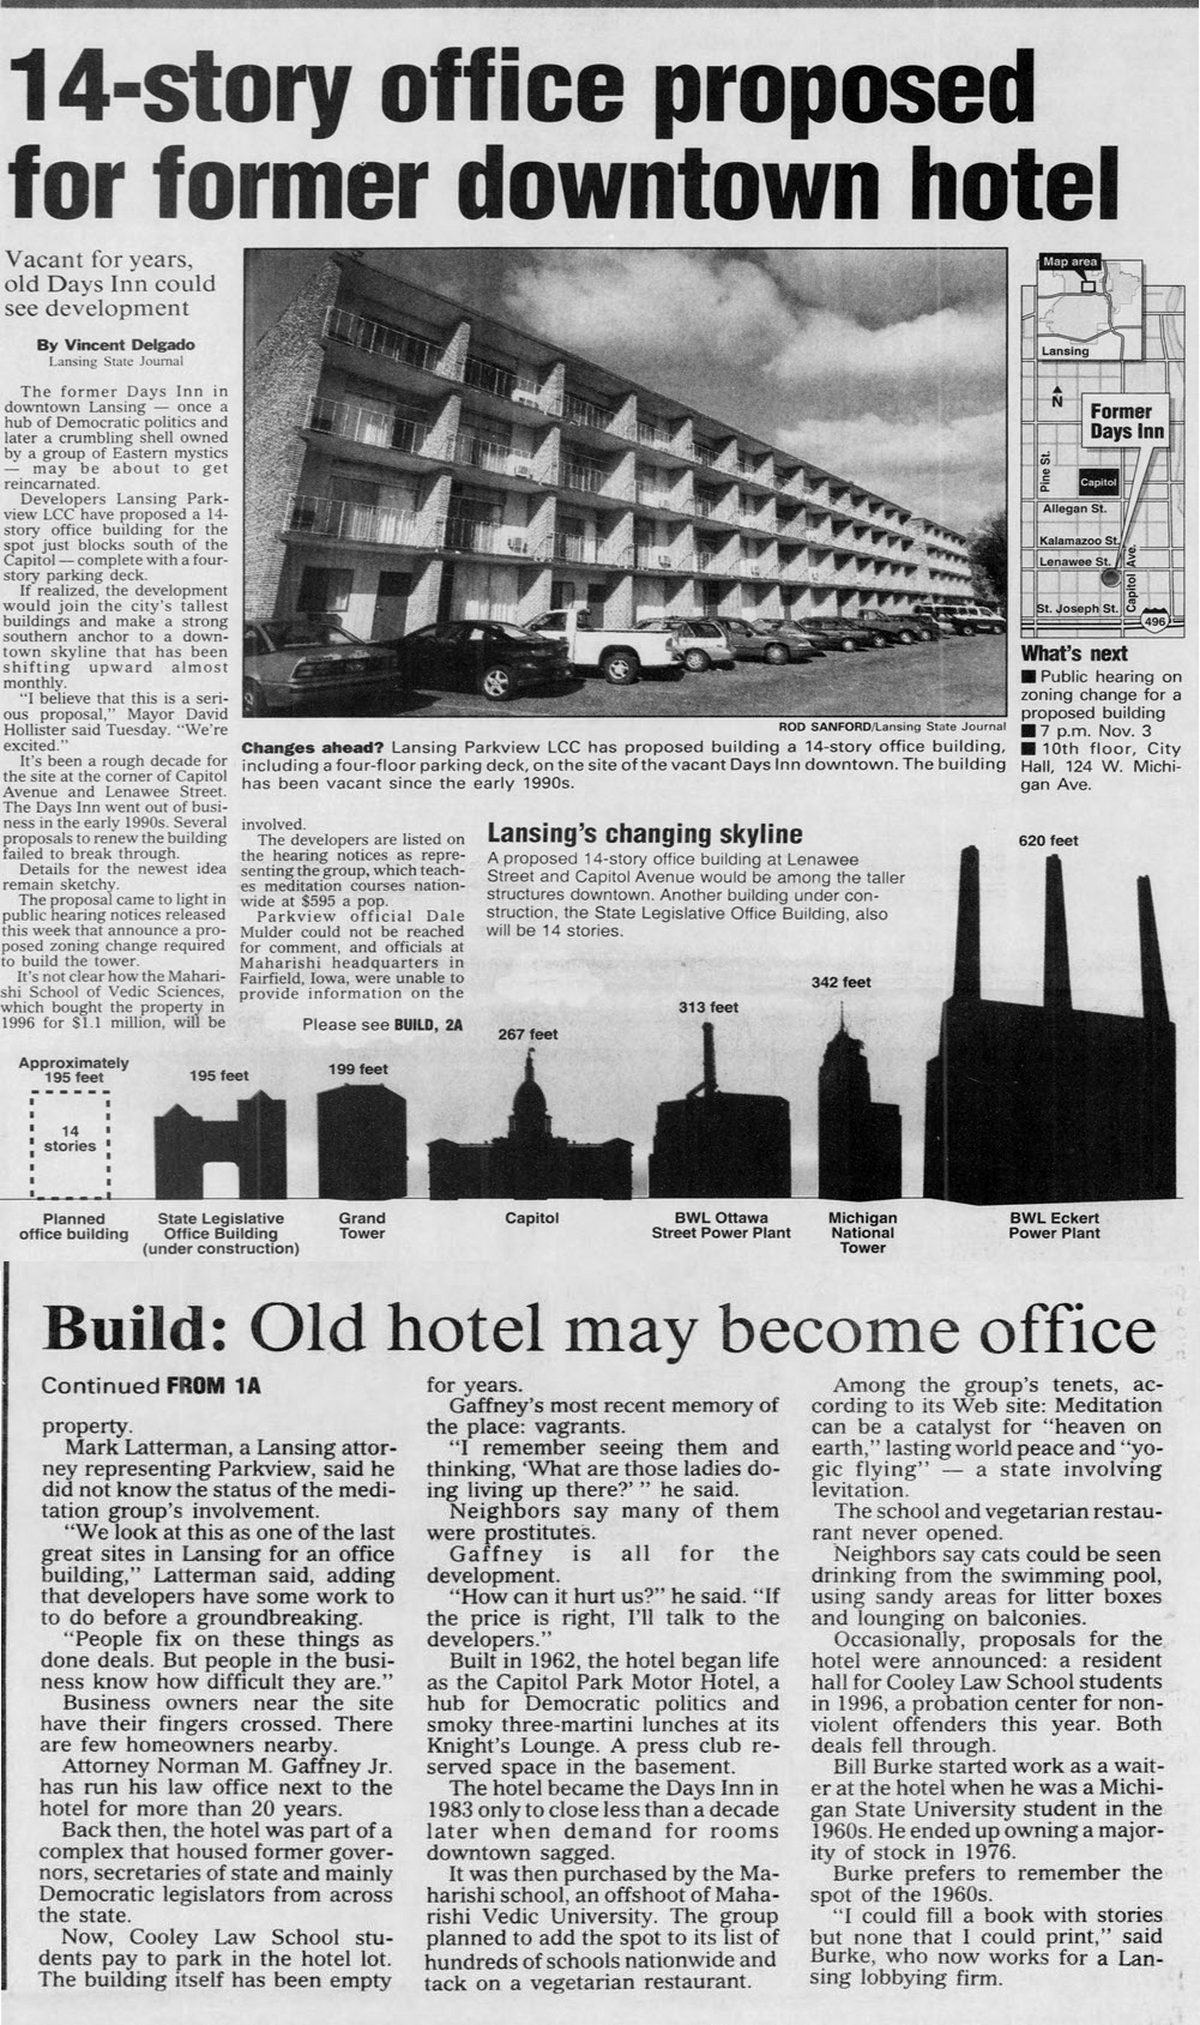 Capitol Park Motor Hotel - Oct 21 1998 Article